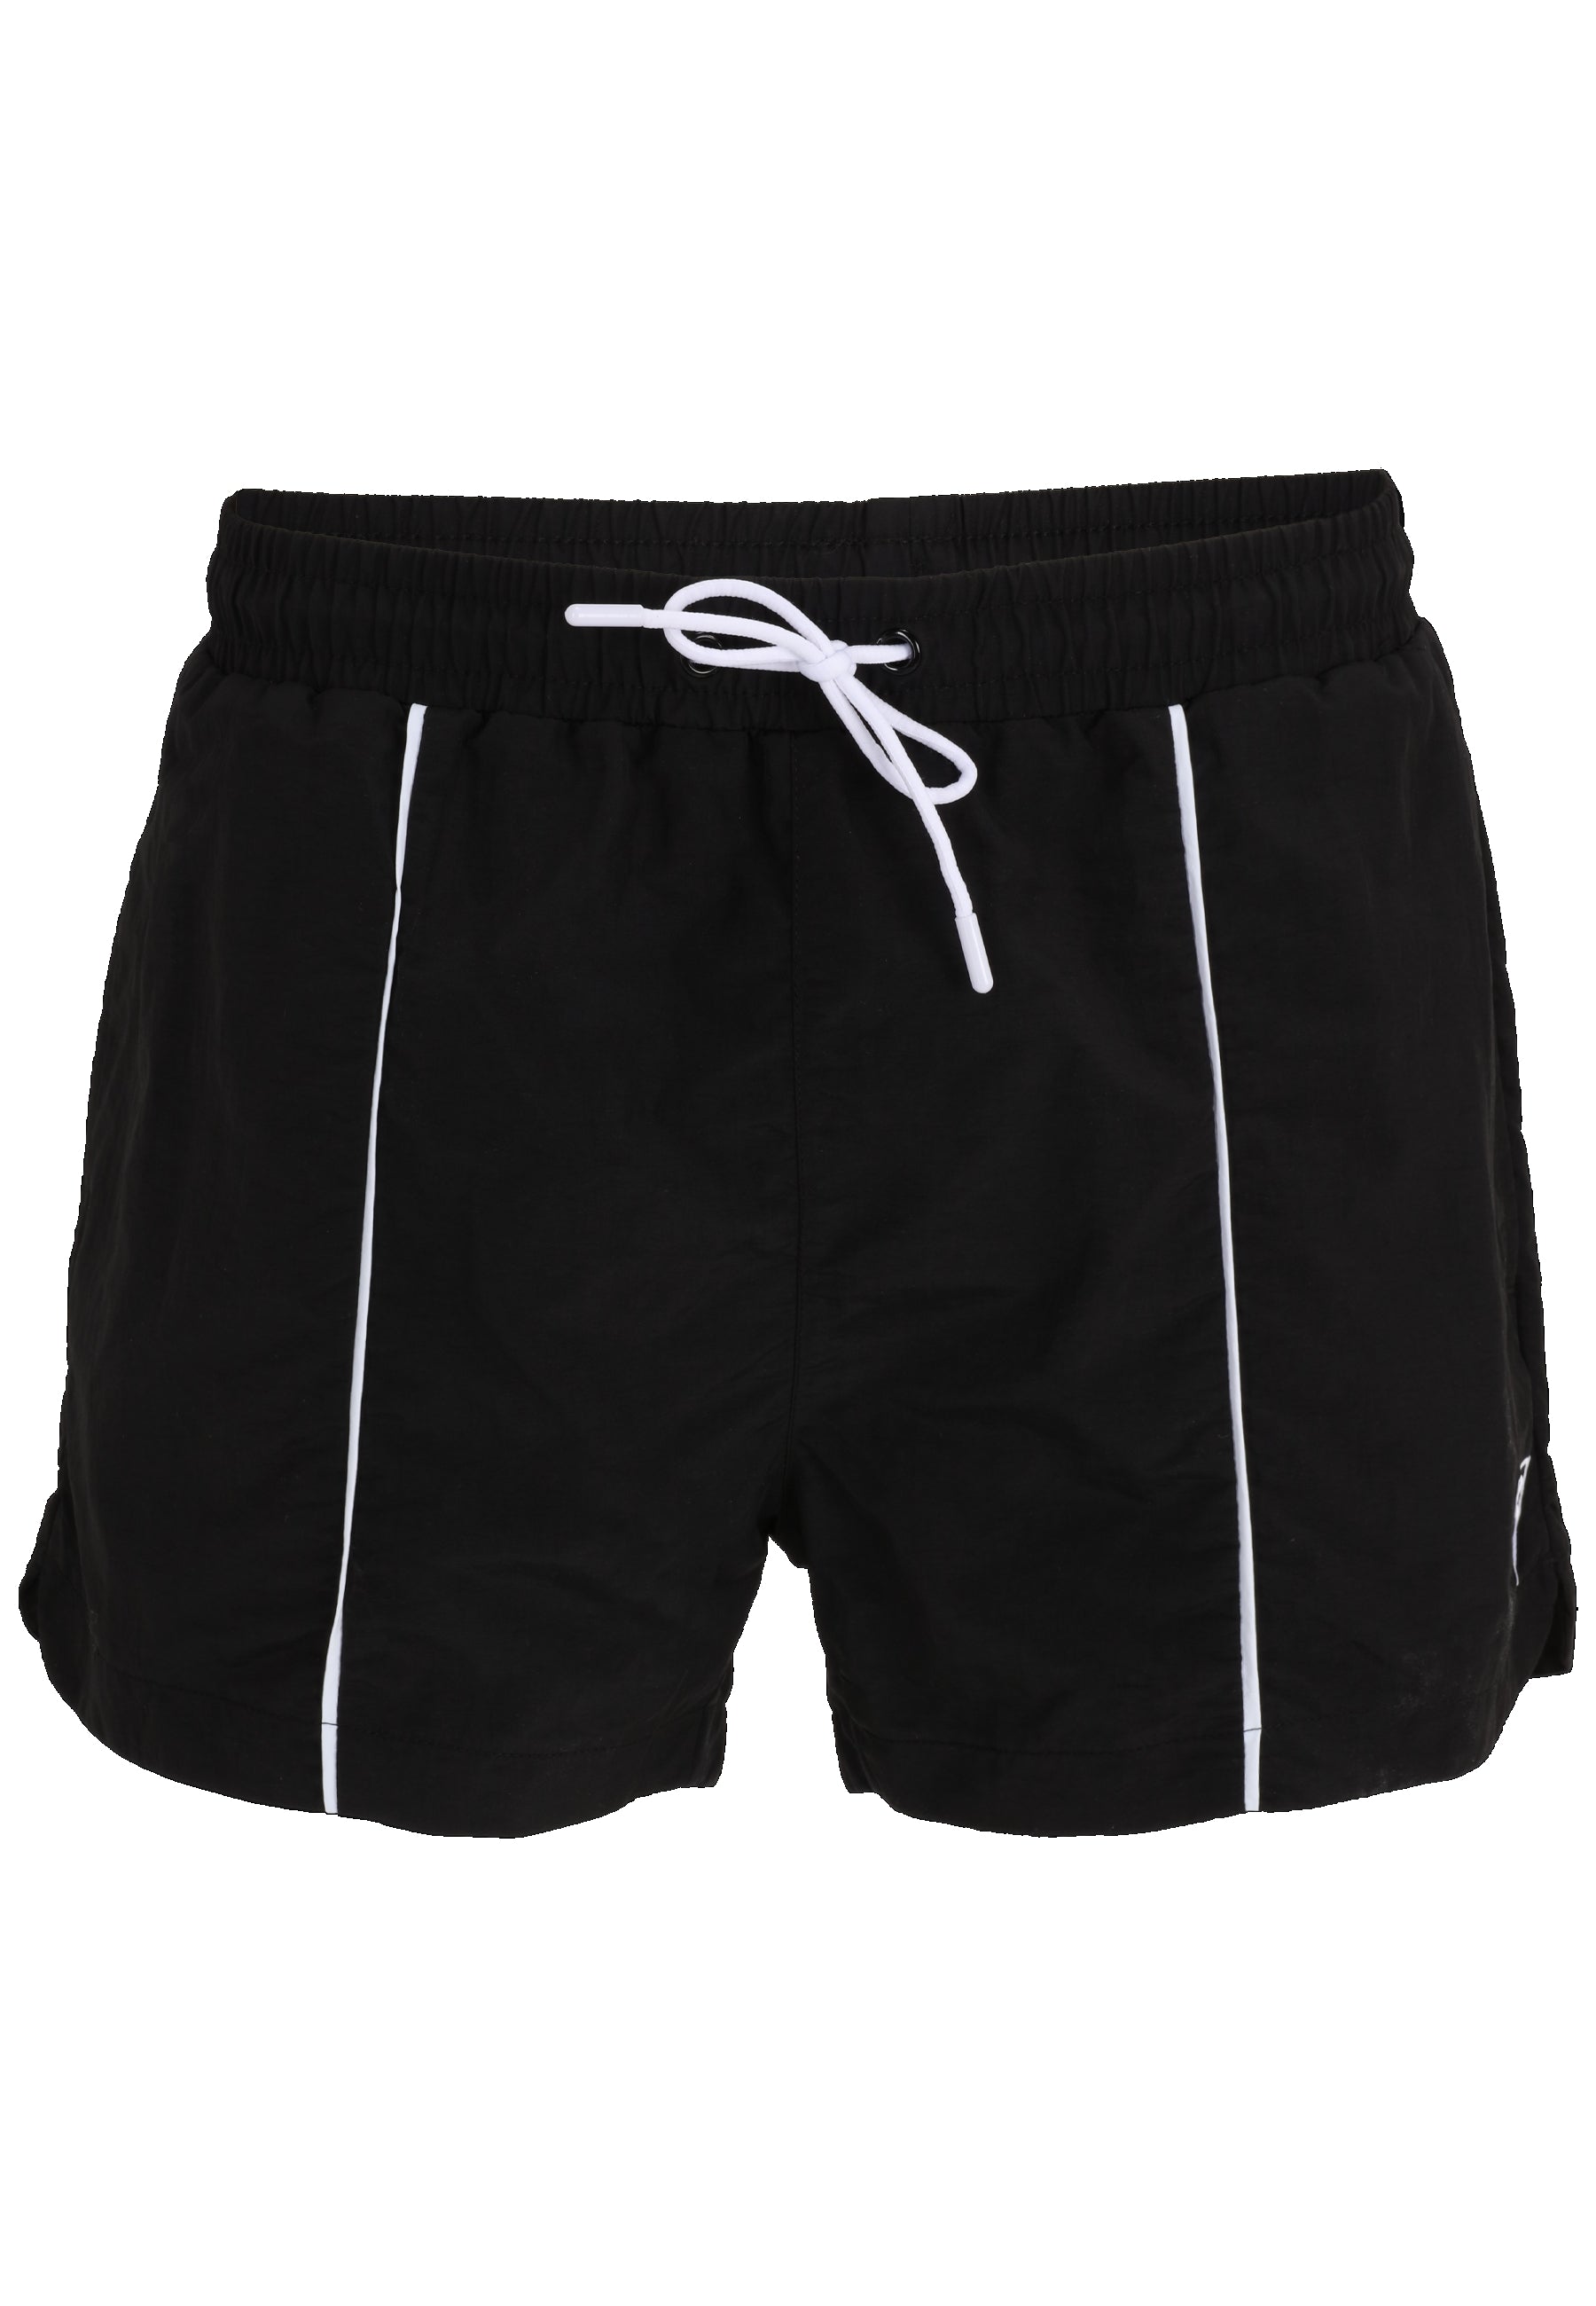 Sorrent Swim Shorts in Black Badehosen Fila   